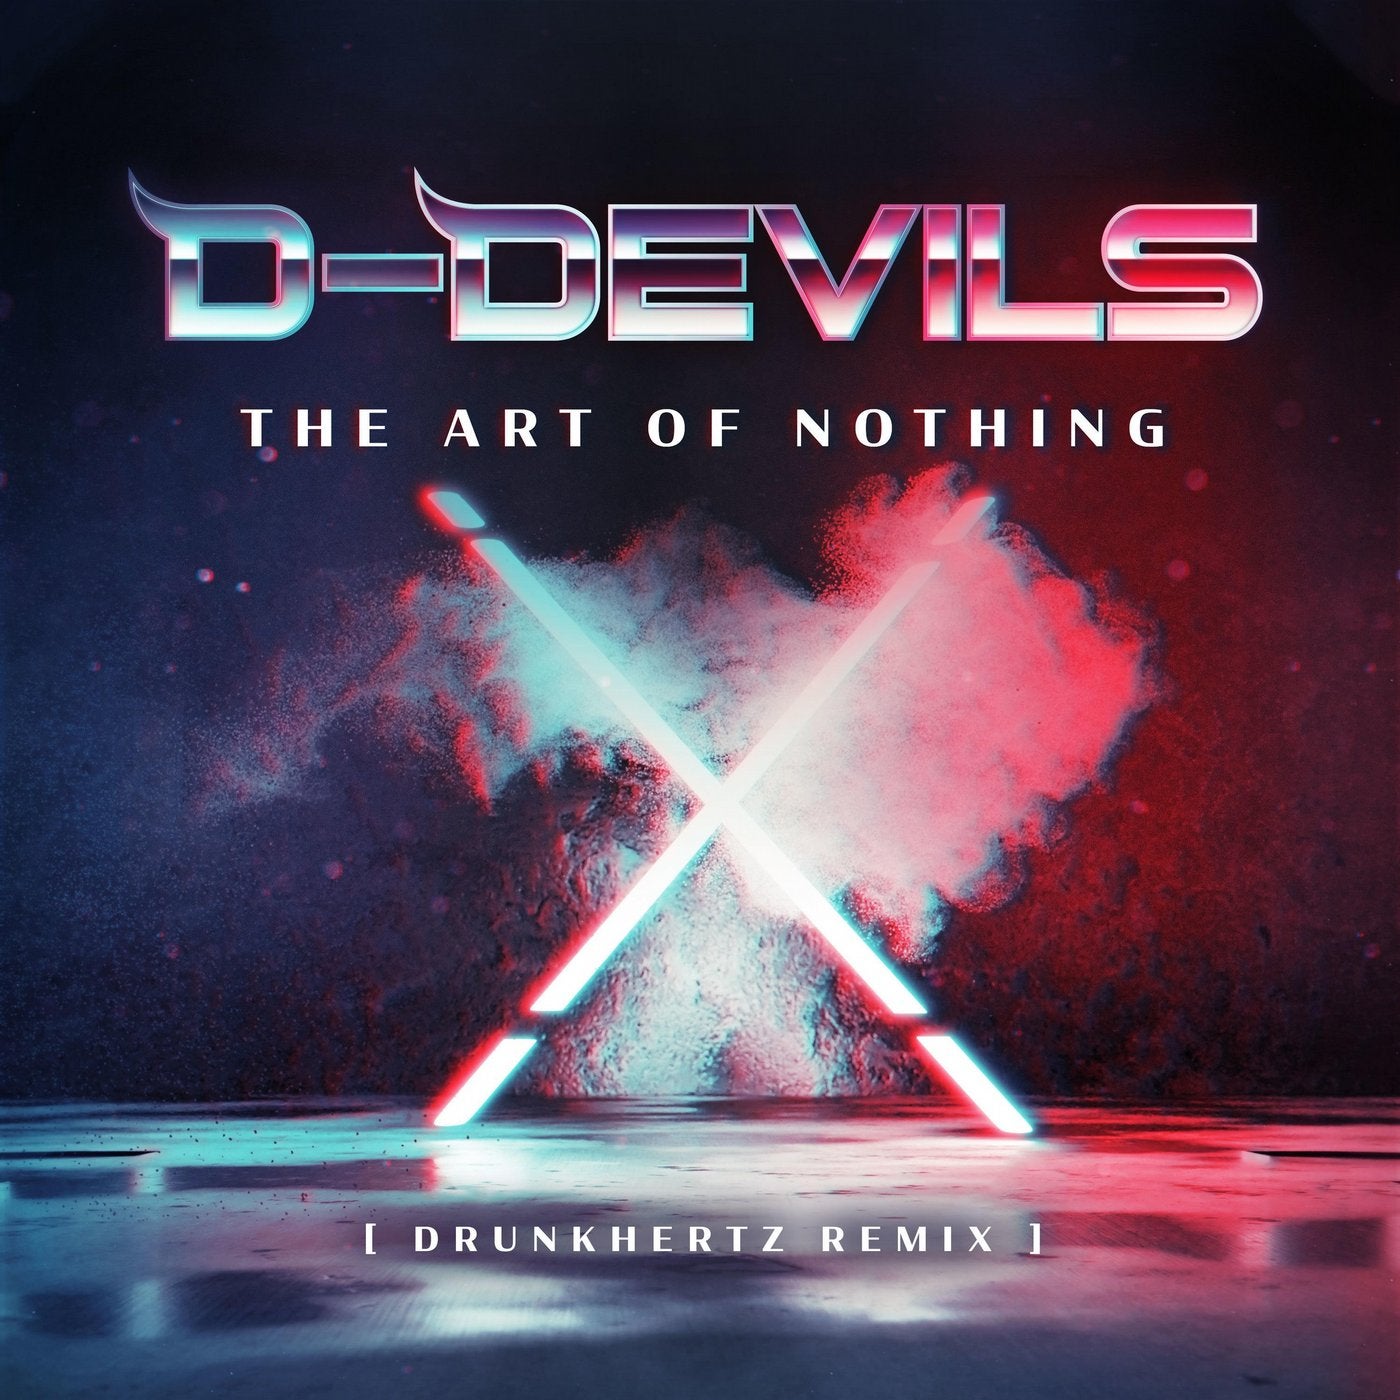 The Art of Nothing (Drunkhertz Remix)